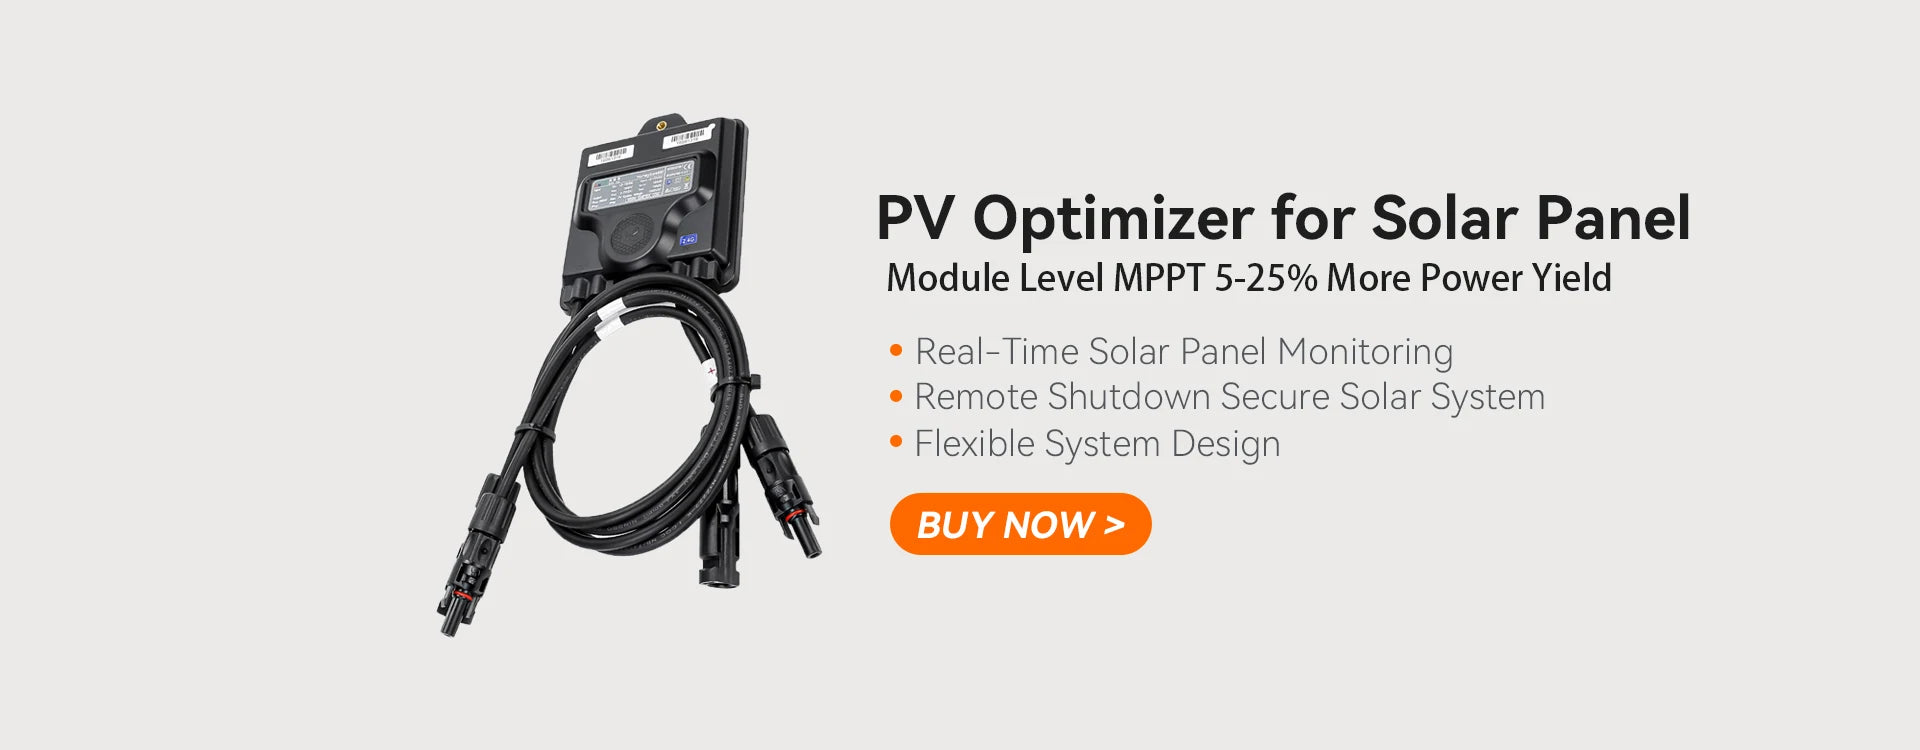 PowMr Hybrid Solar Inverter, Powerful hybrid solar inverter for batteries, with pure sine wave output and multi-peak power tracking.